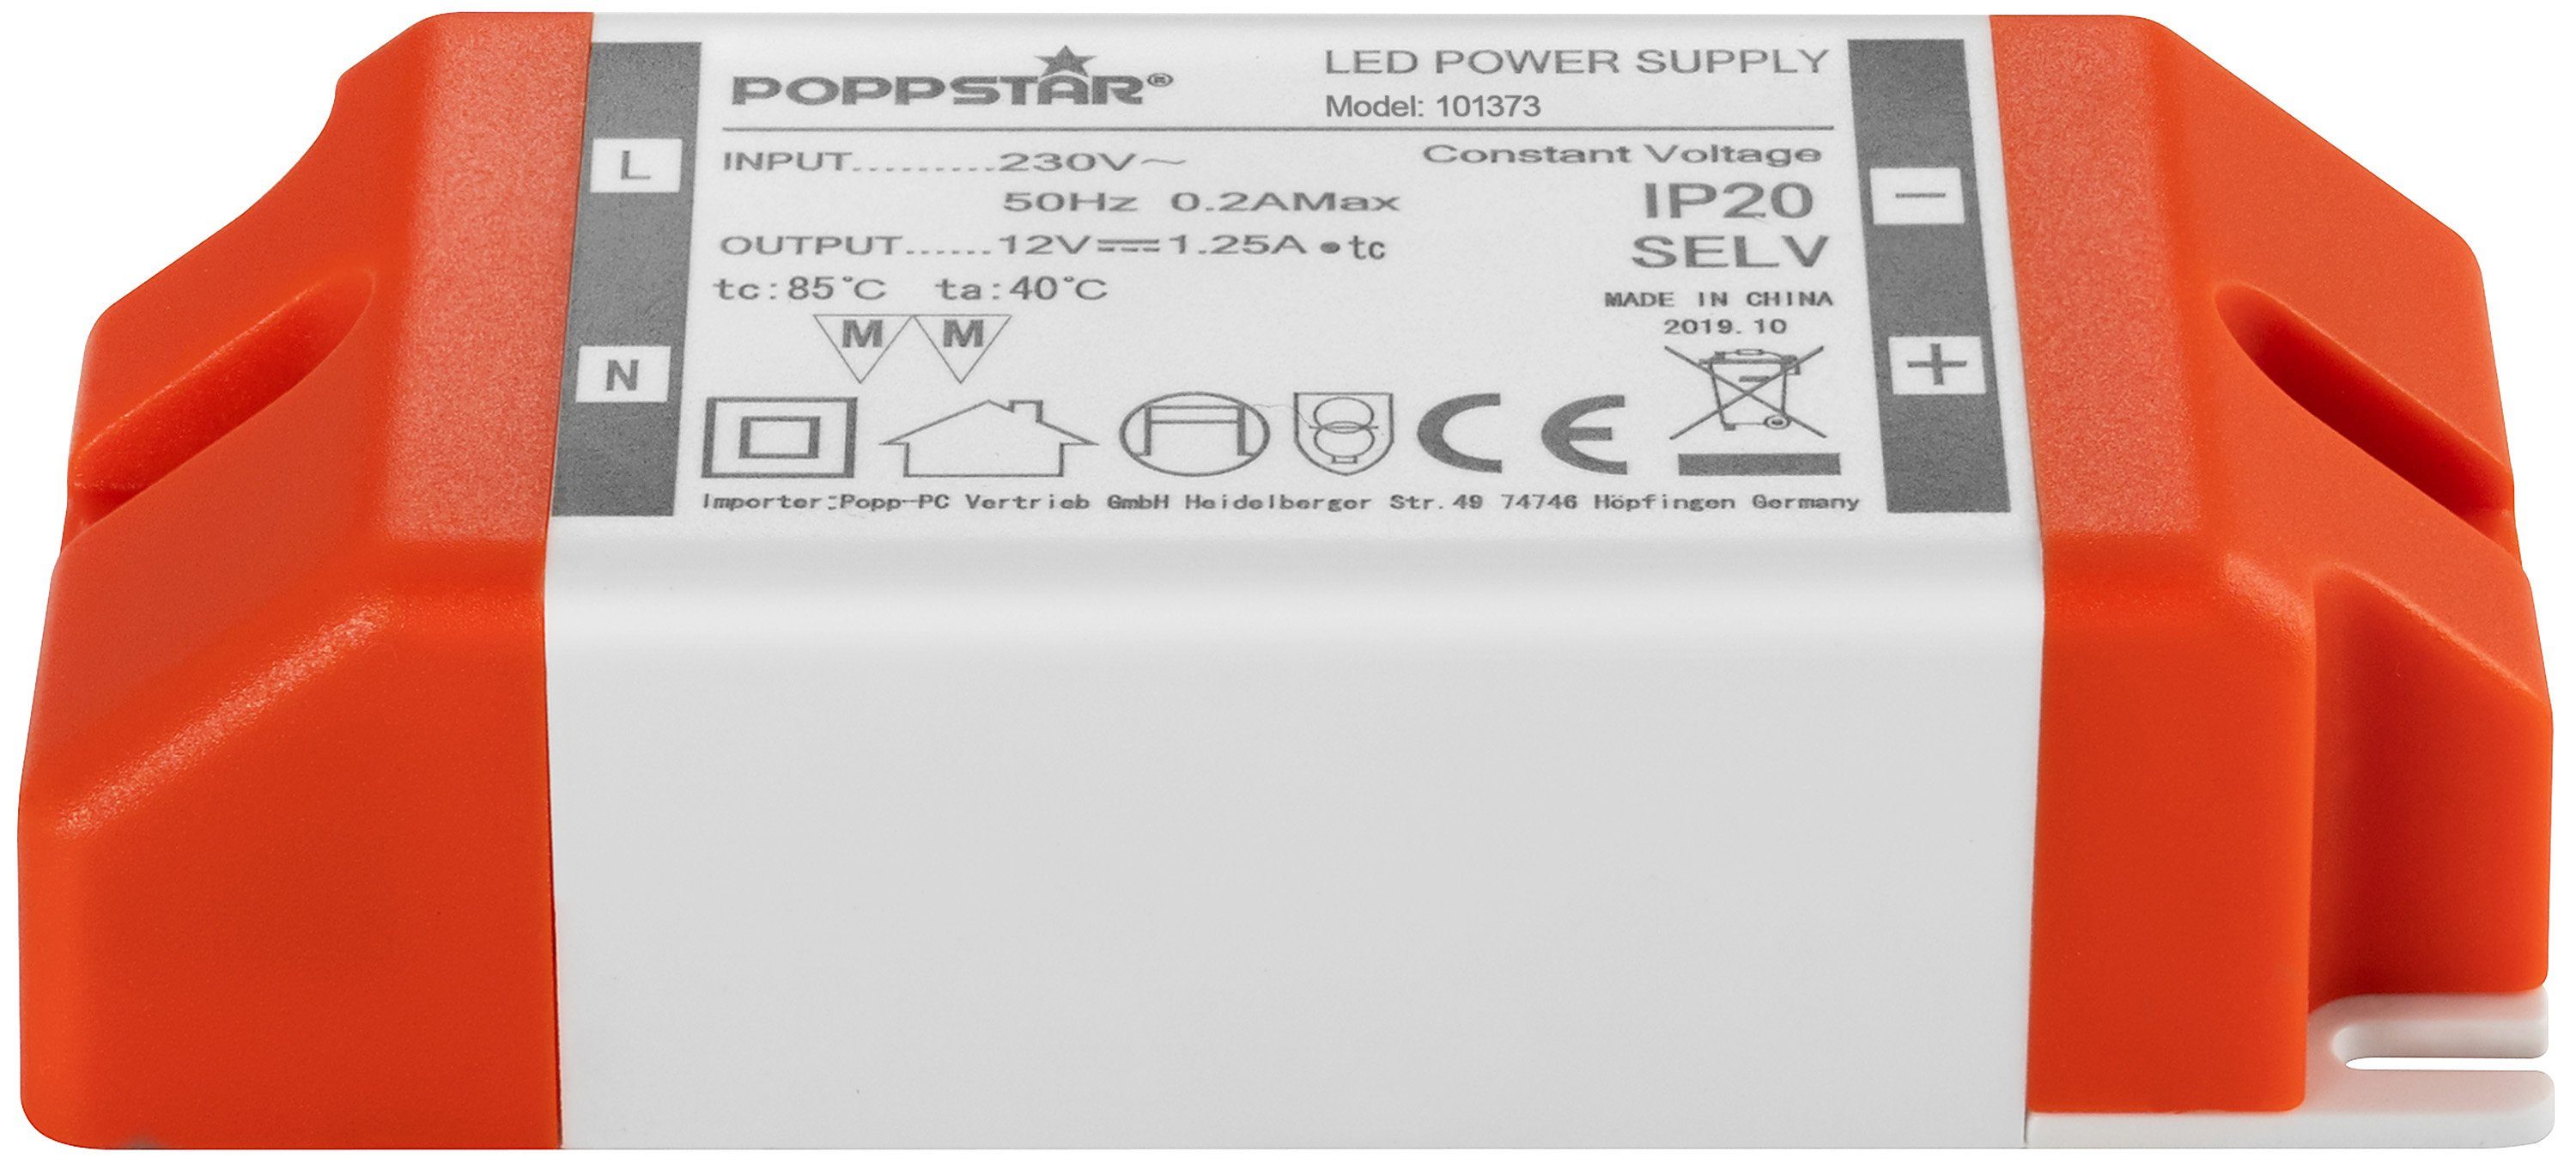 und LED 0,15 Watt Transformator (für Trafo 1,25A Poppstar 15 LED LED Strips, LED 230V DC Bänder) / bis LED Lampen 12V AC